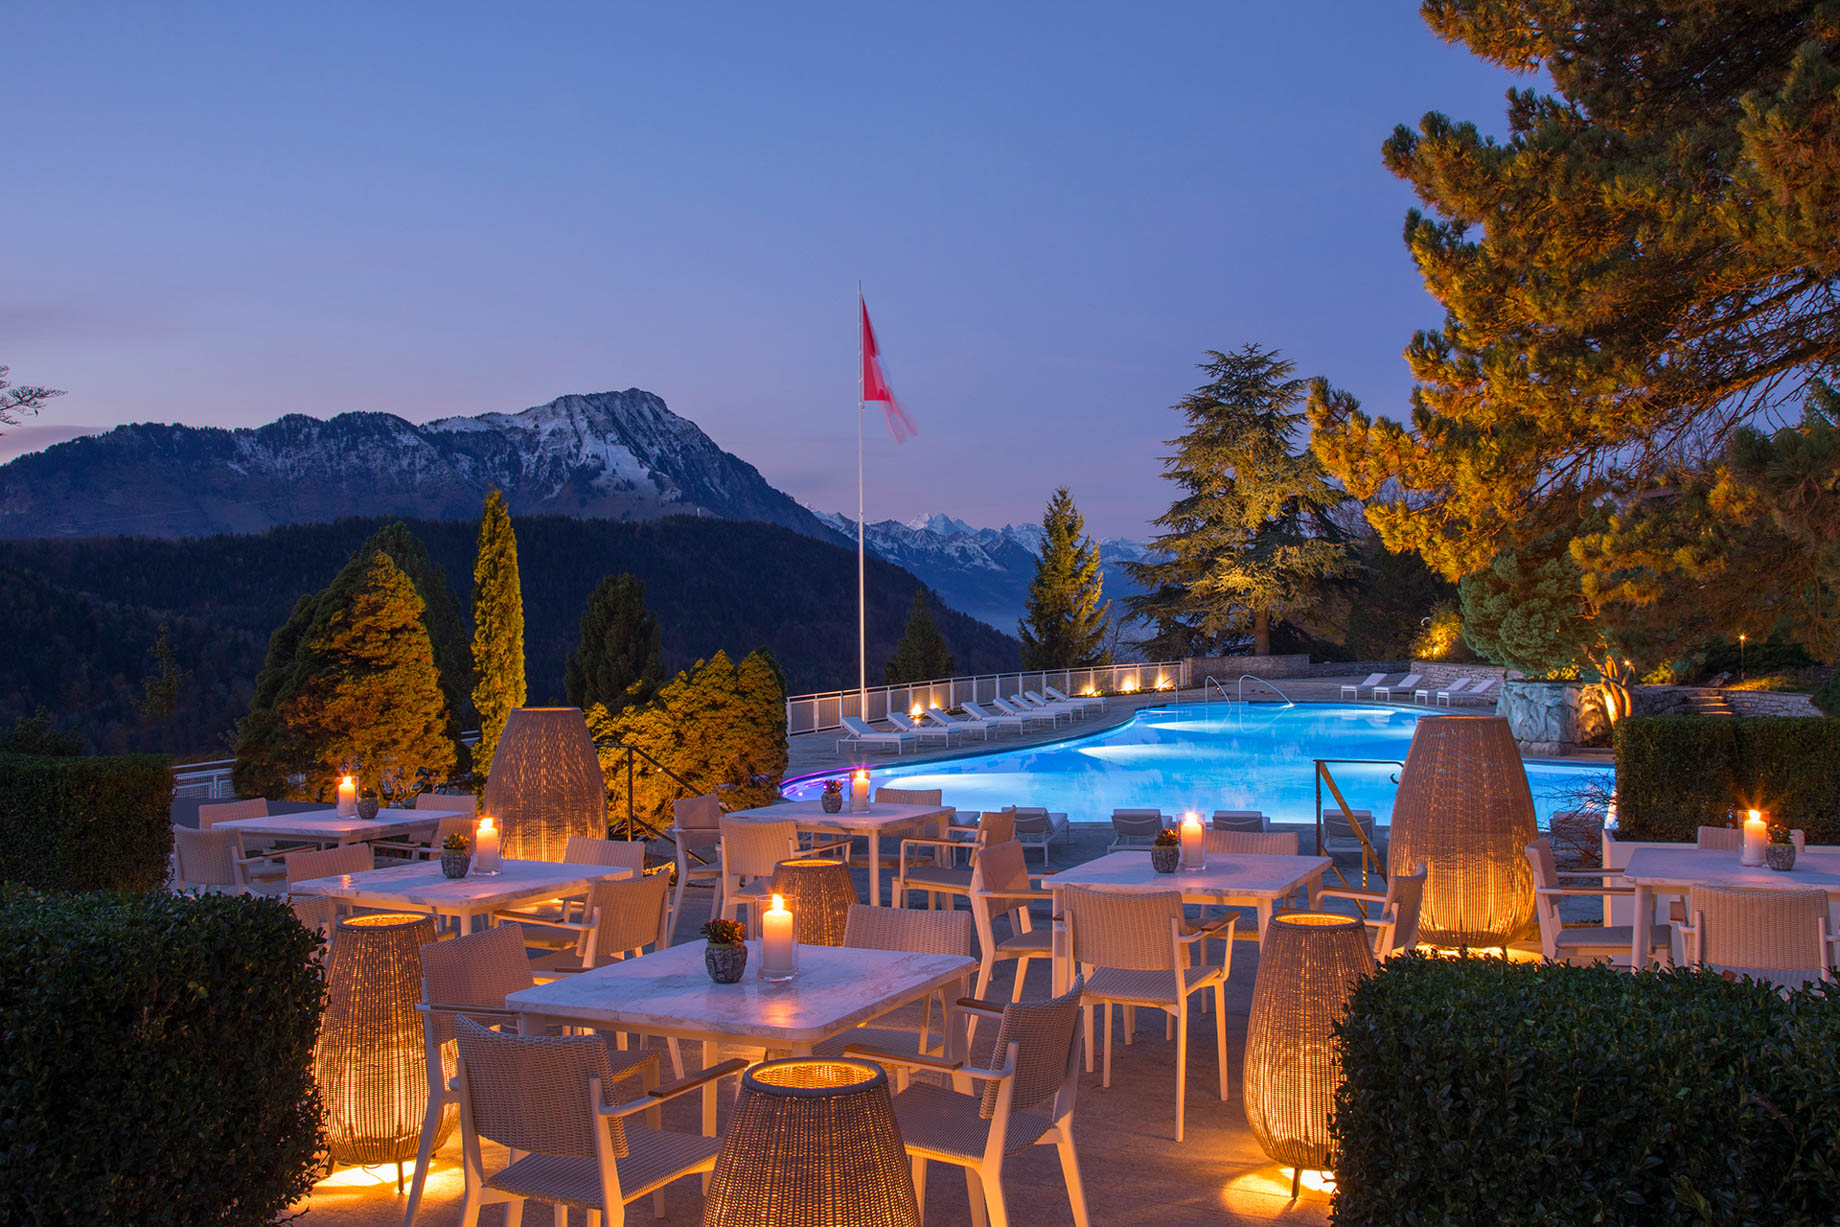 Burgenstock Hotel & Alpine Spa - Obburgen, Switzerland - Pool Deck Tables